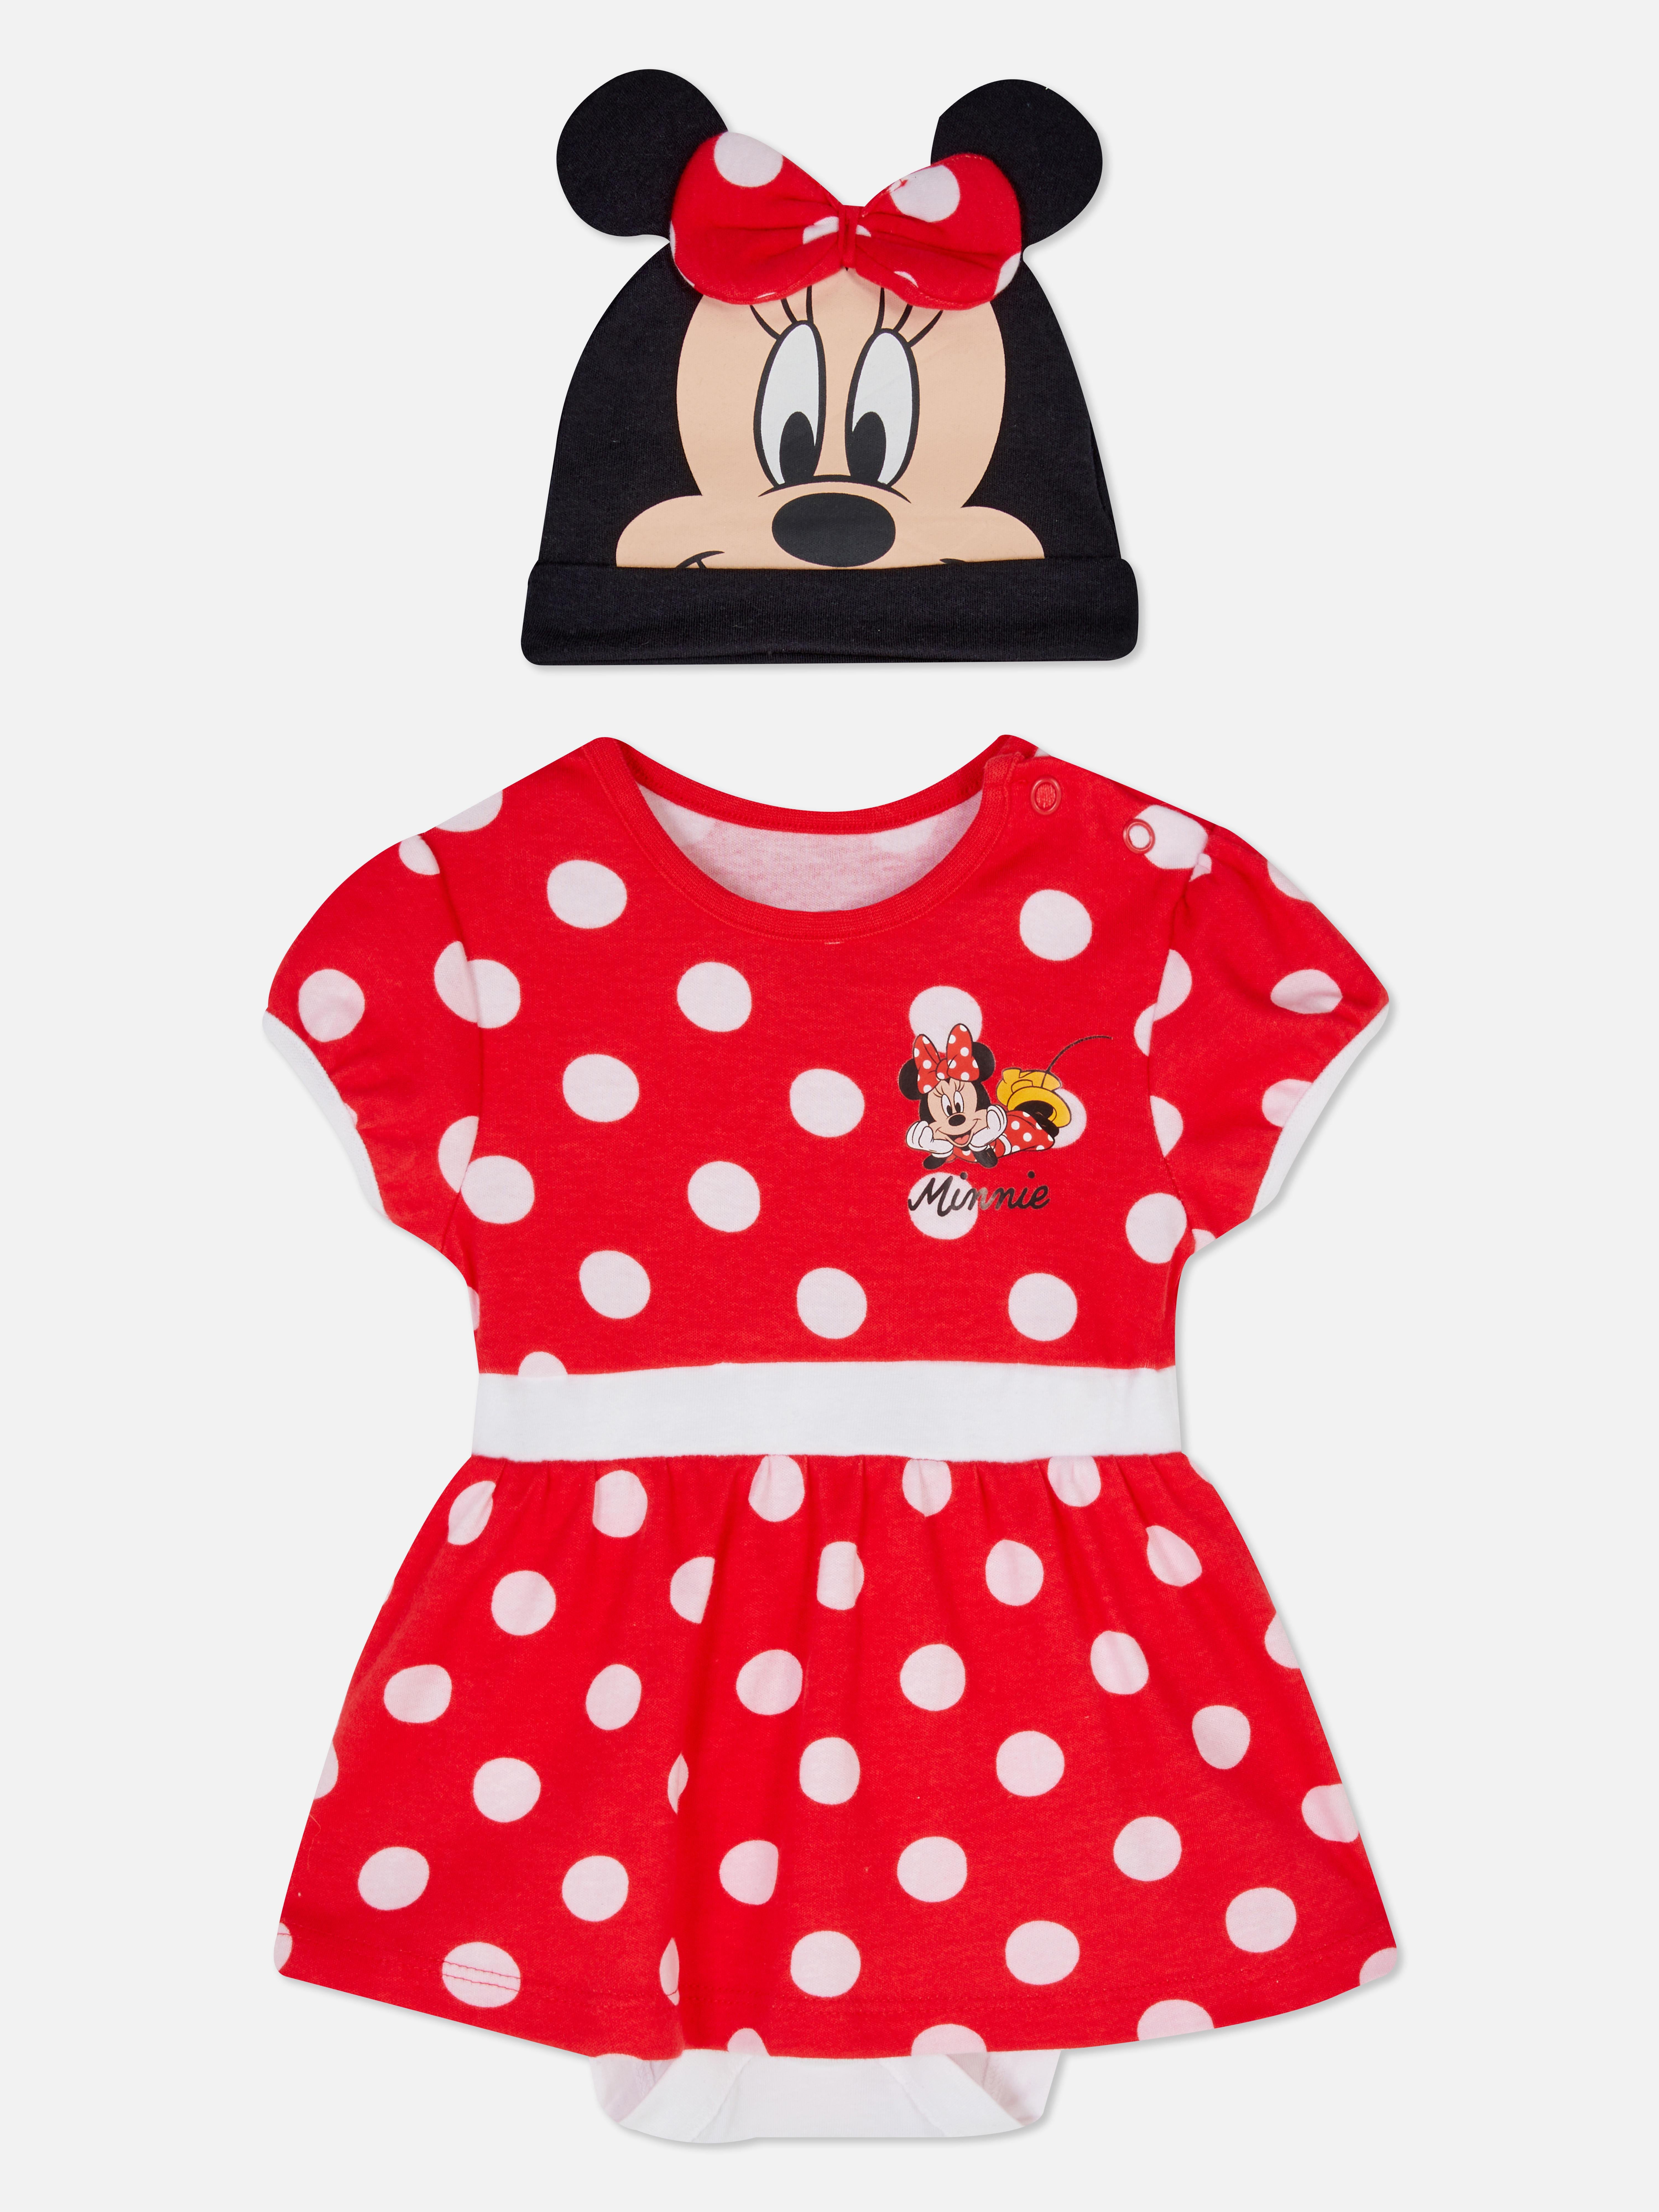 Disney’s Minnie Mouse Bodysuit and Hat Set